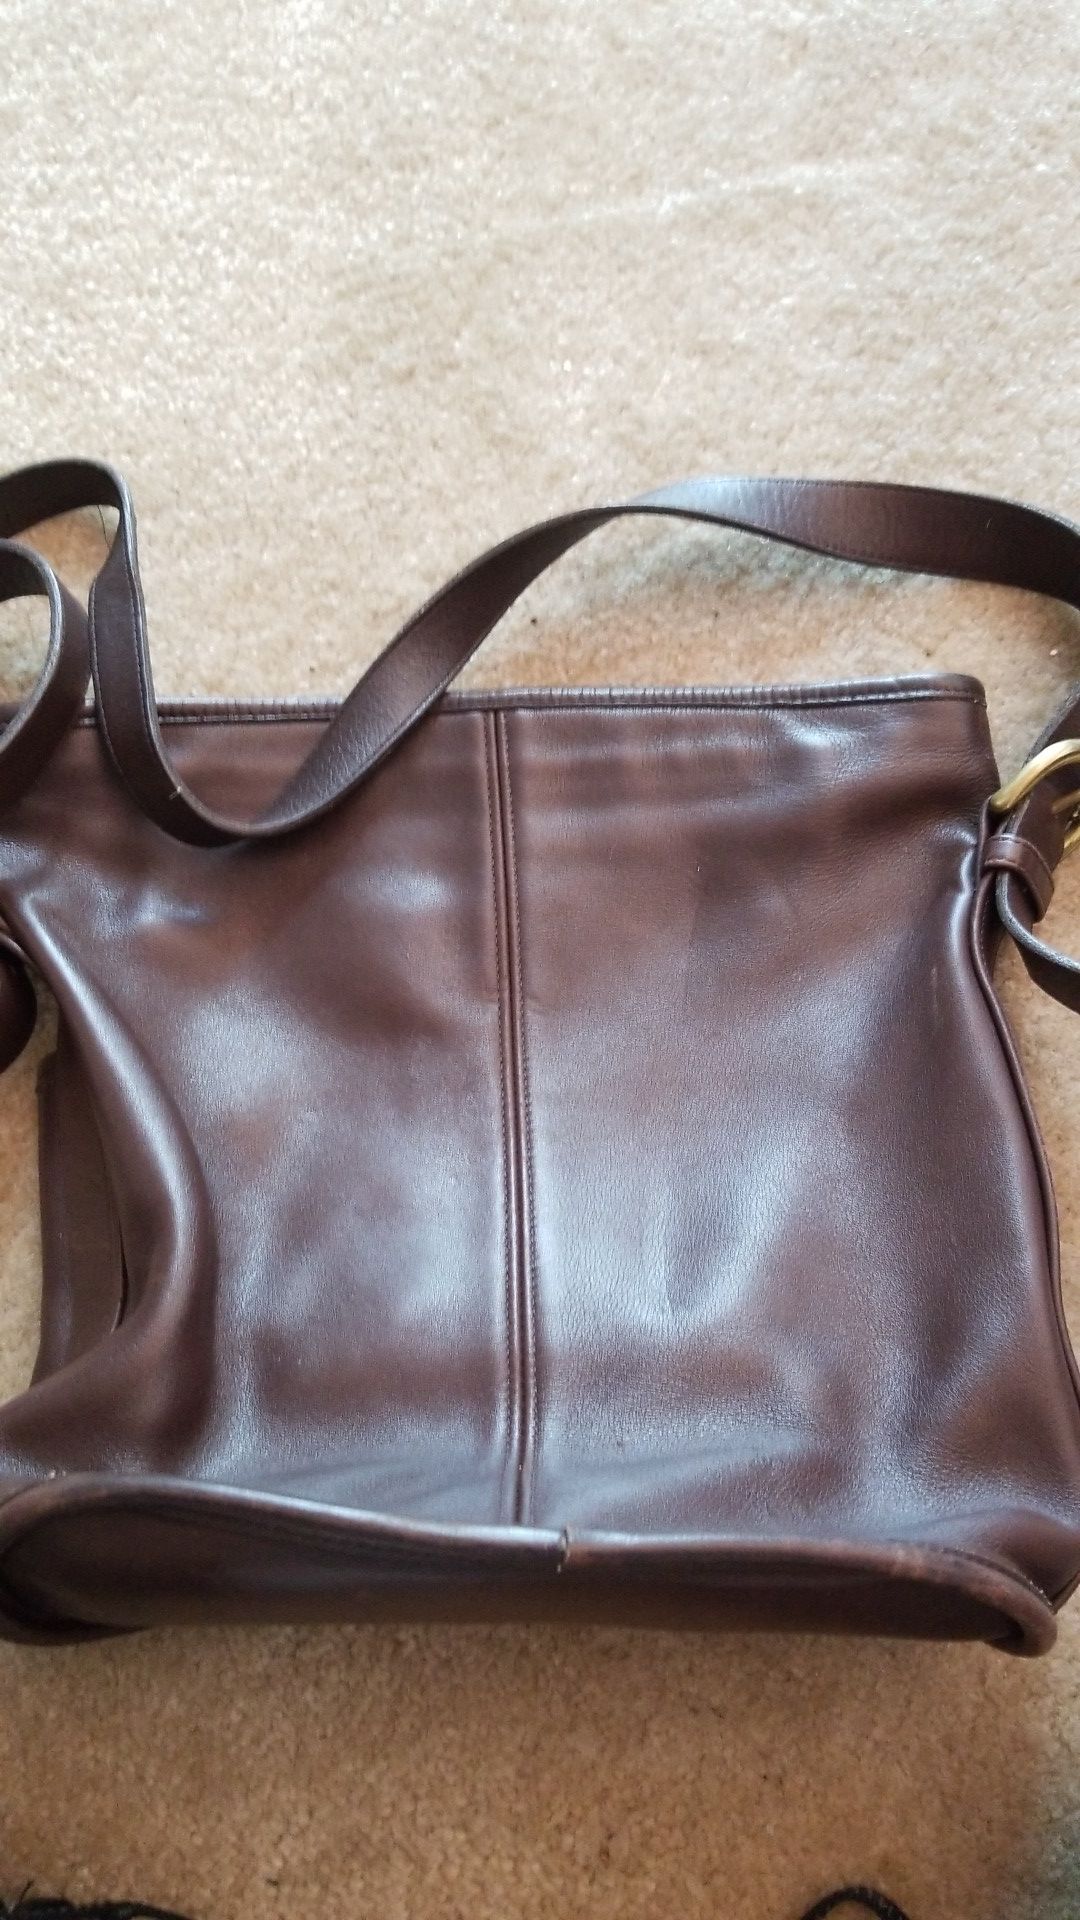 Authentic Coach Leather Handbag Purse